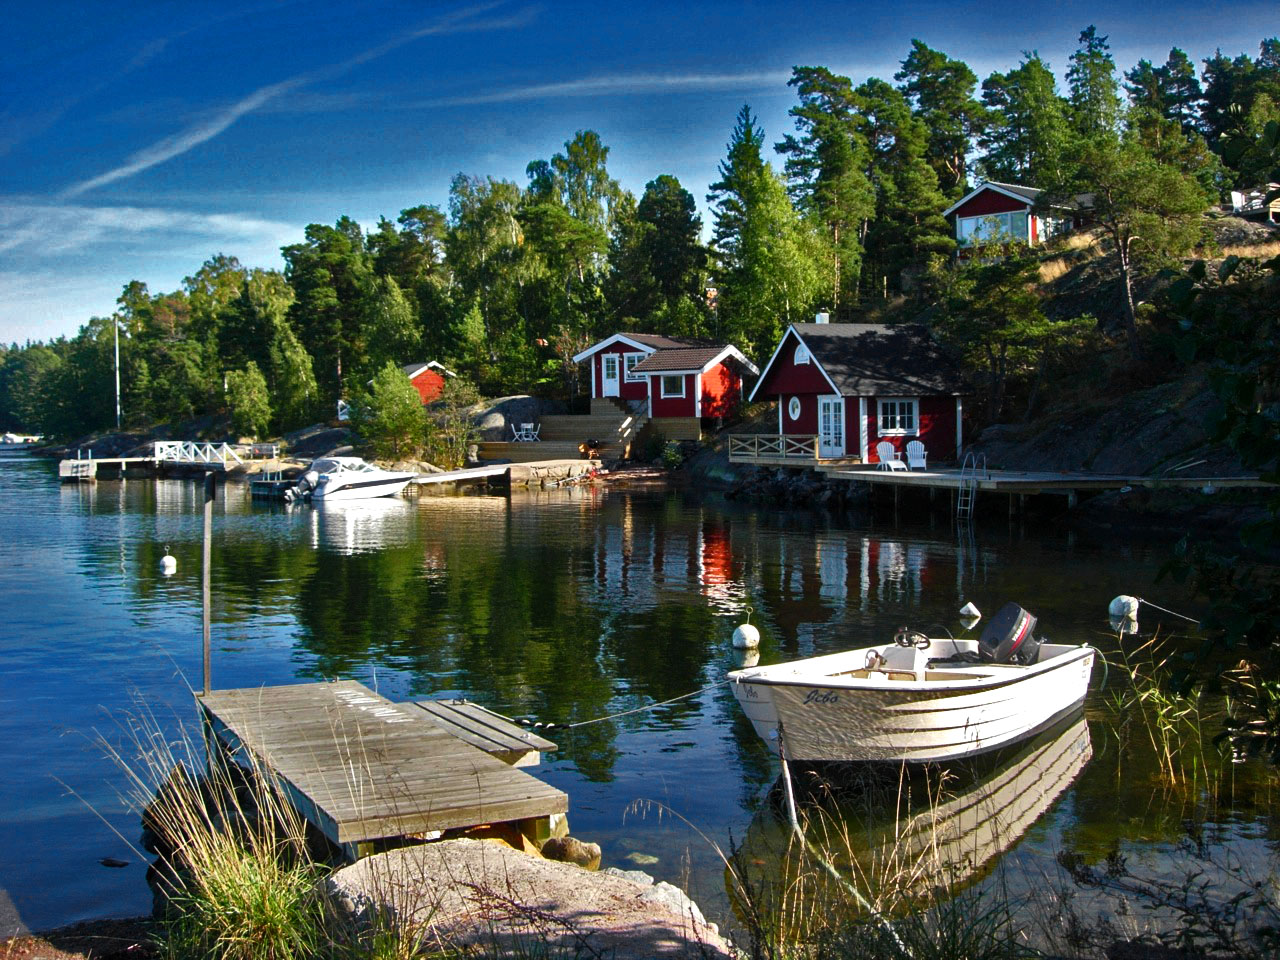 A charmingly Swedish scene at Hästedegård-brygga on Ljustero.